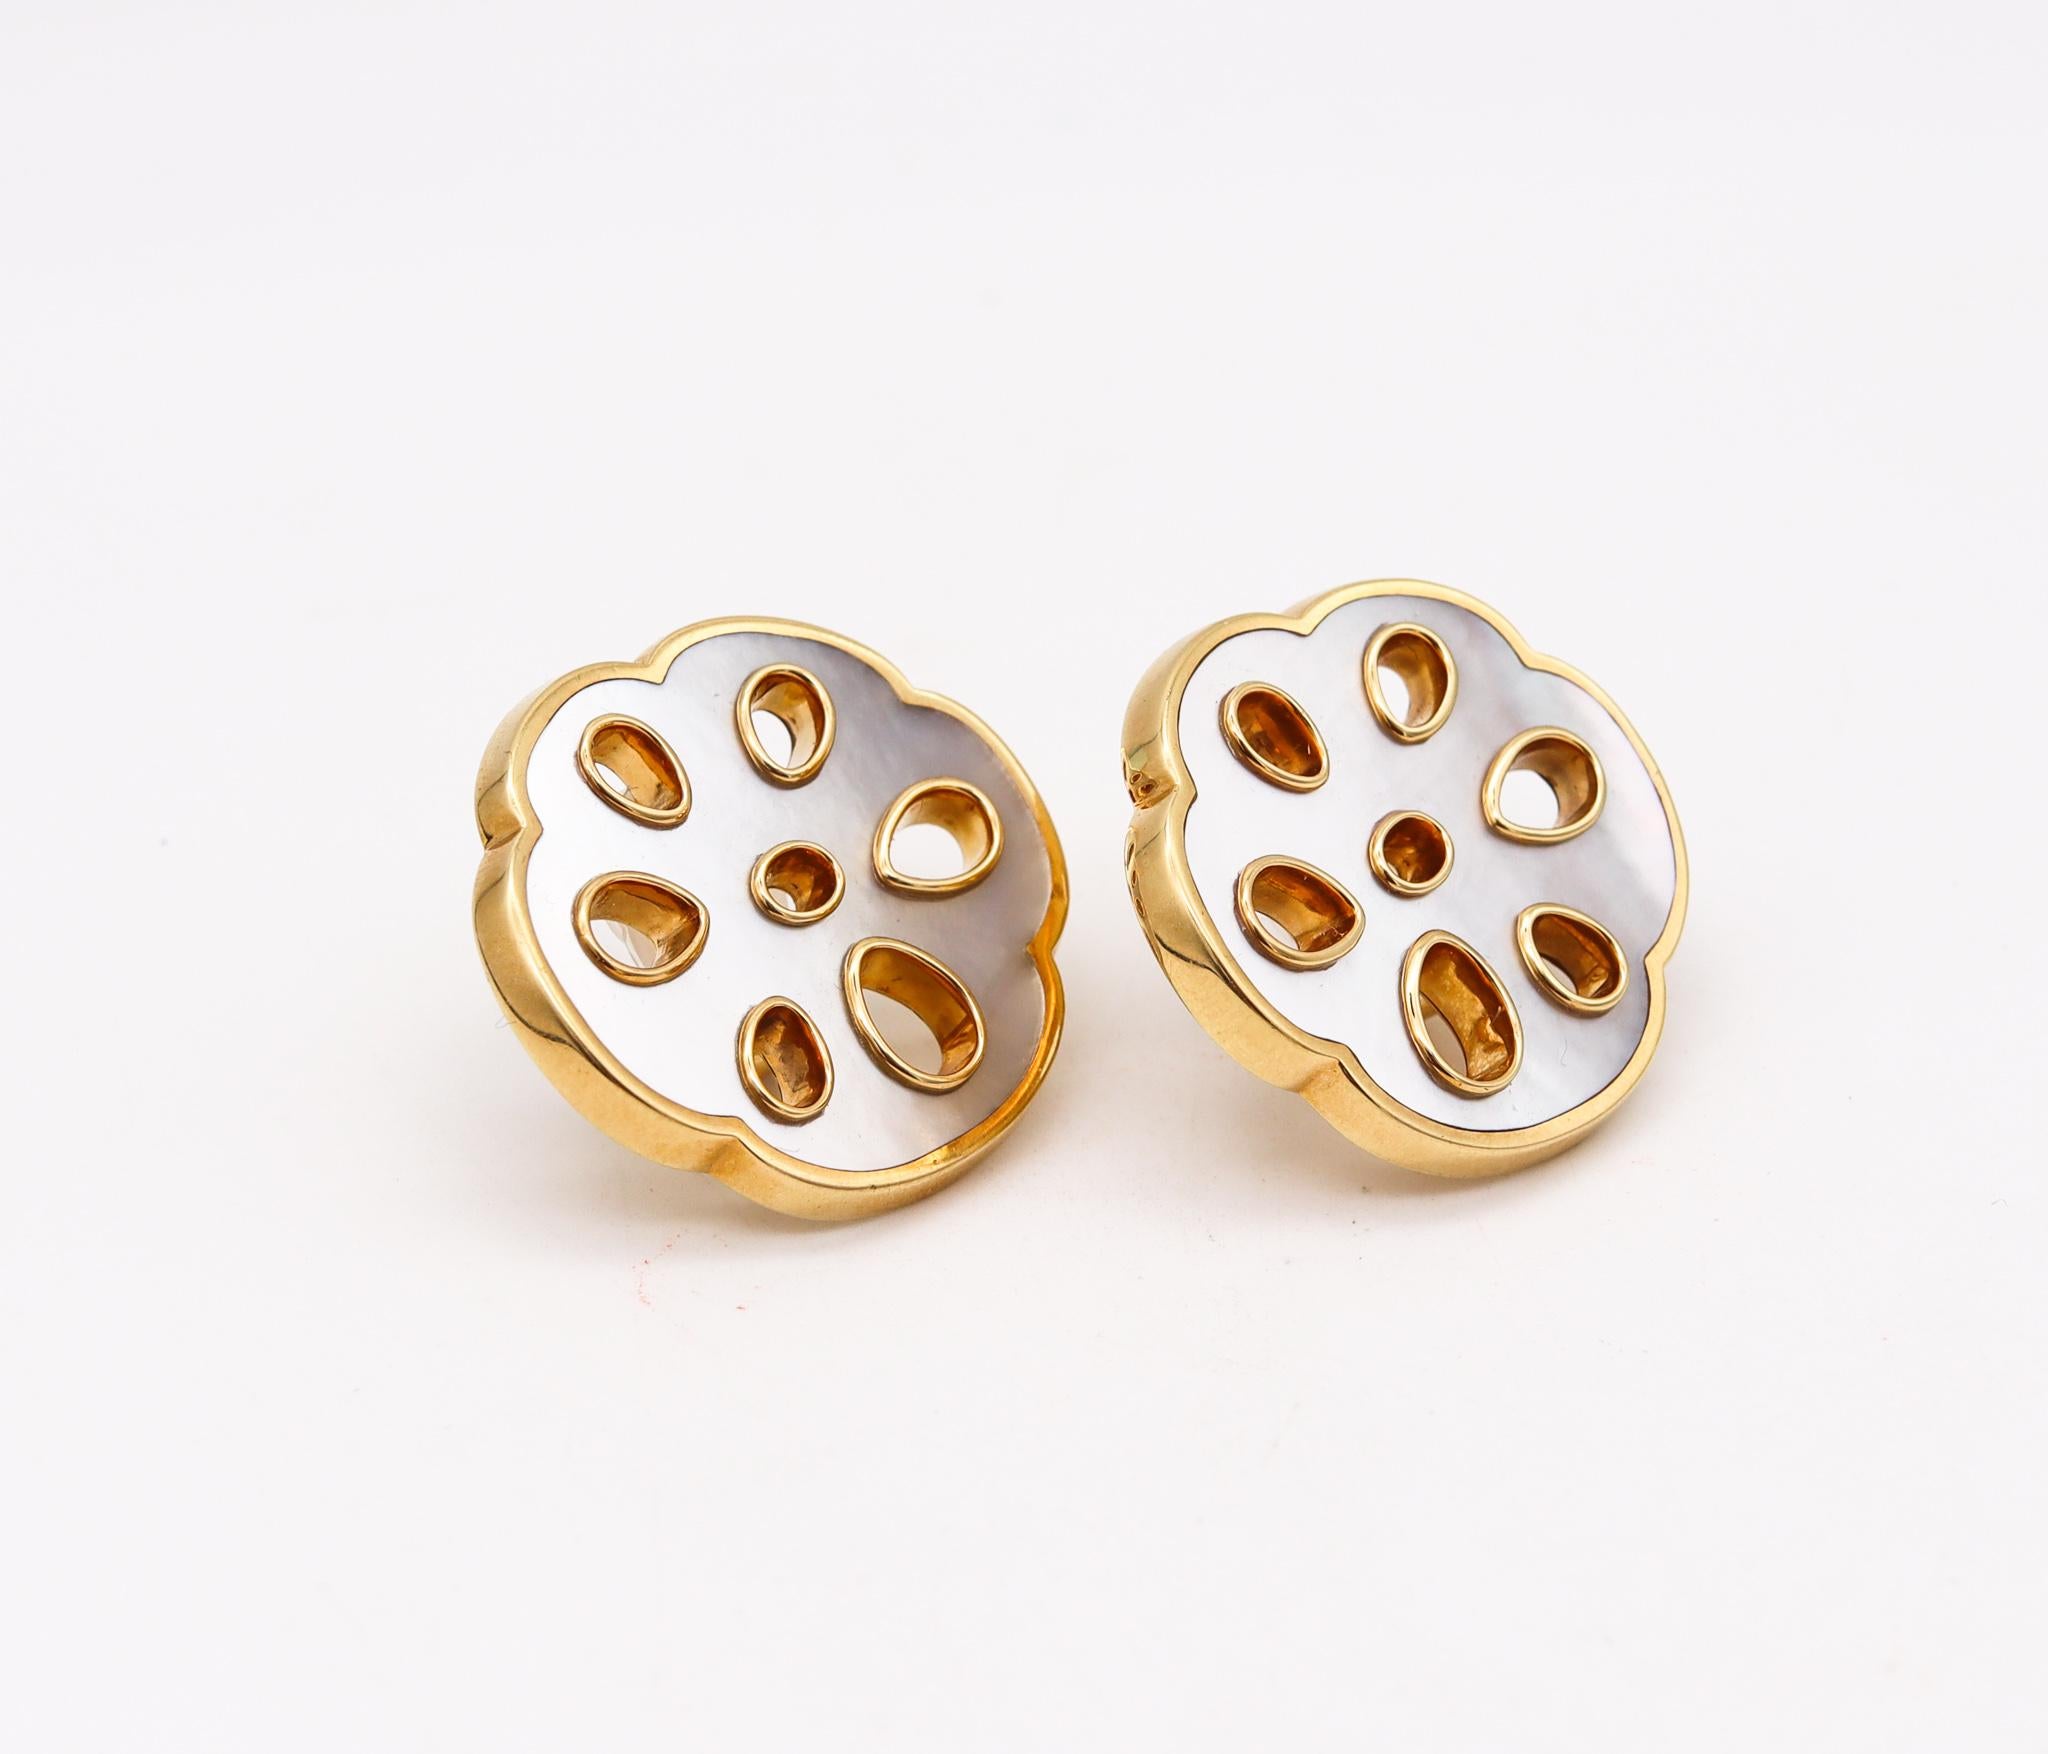 Modernist Angela Cummings 1988 Studios Lotus Clip Earrings in 18Kt Gold with White Nacre